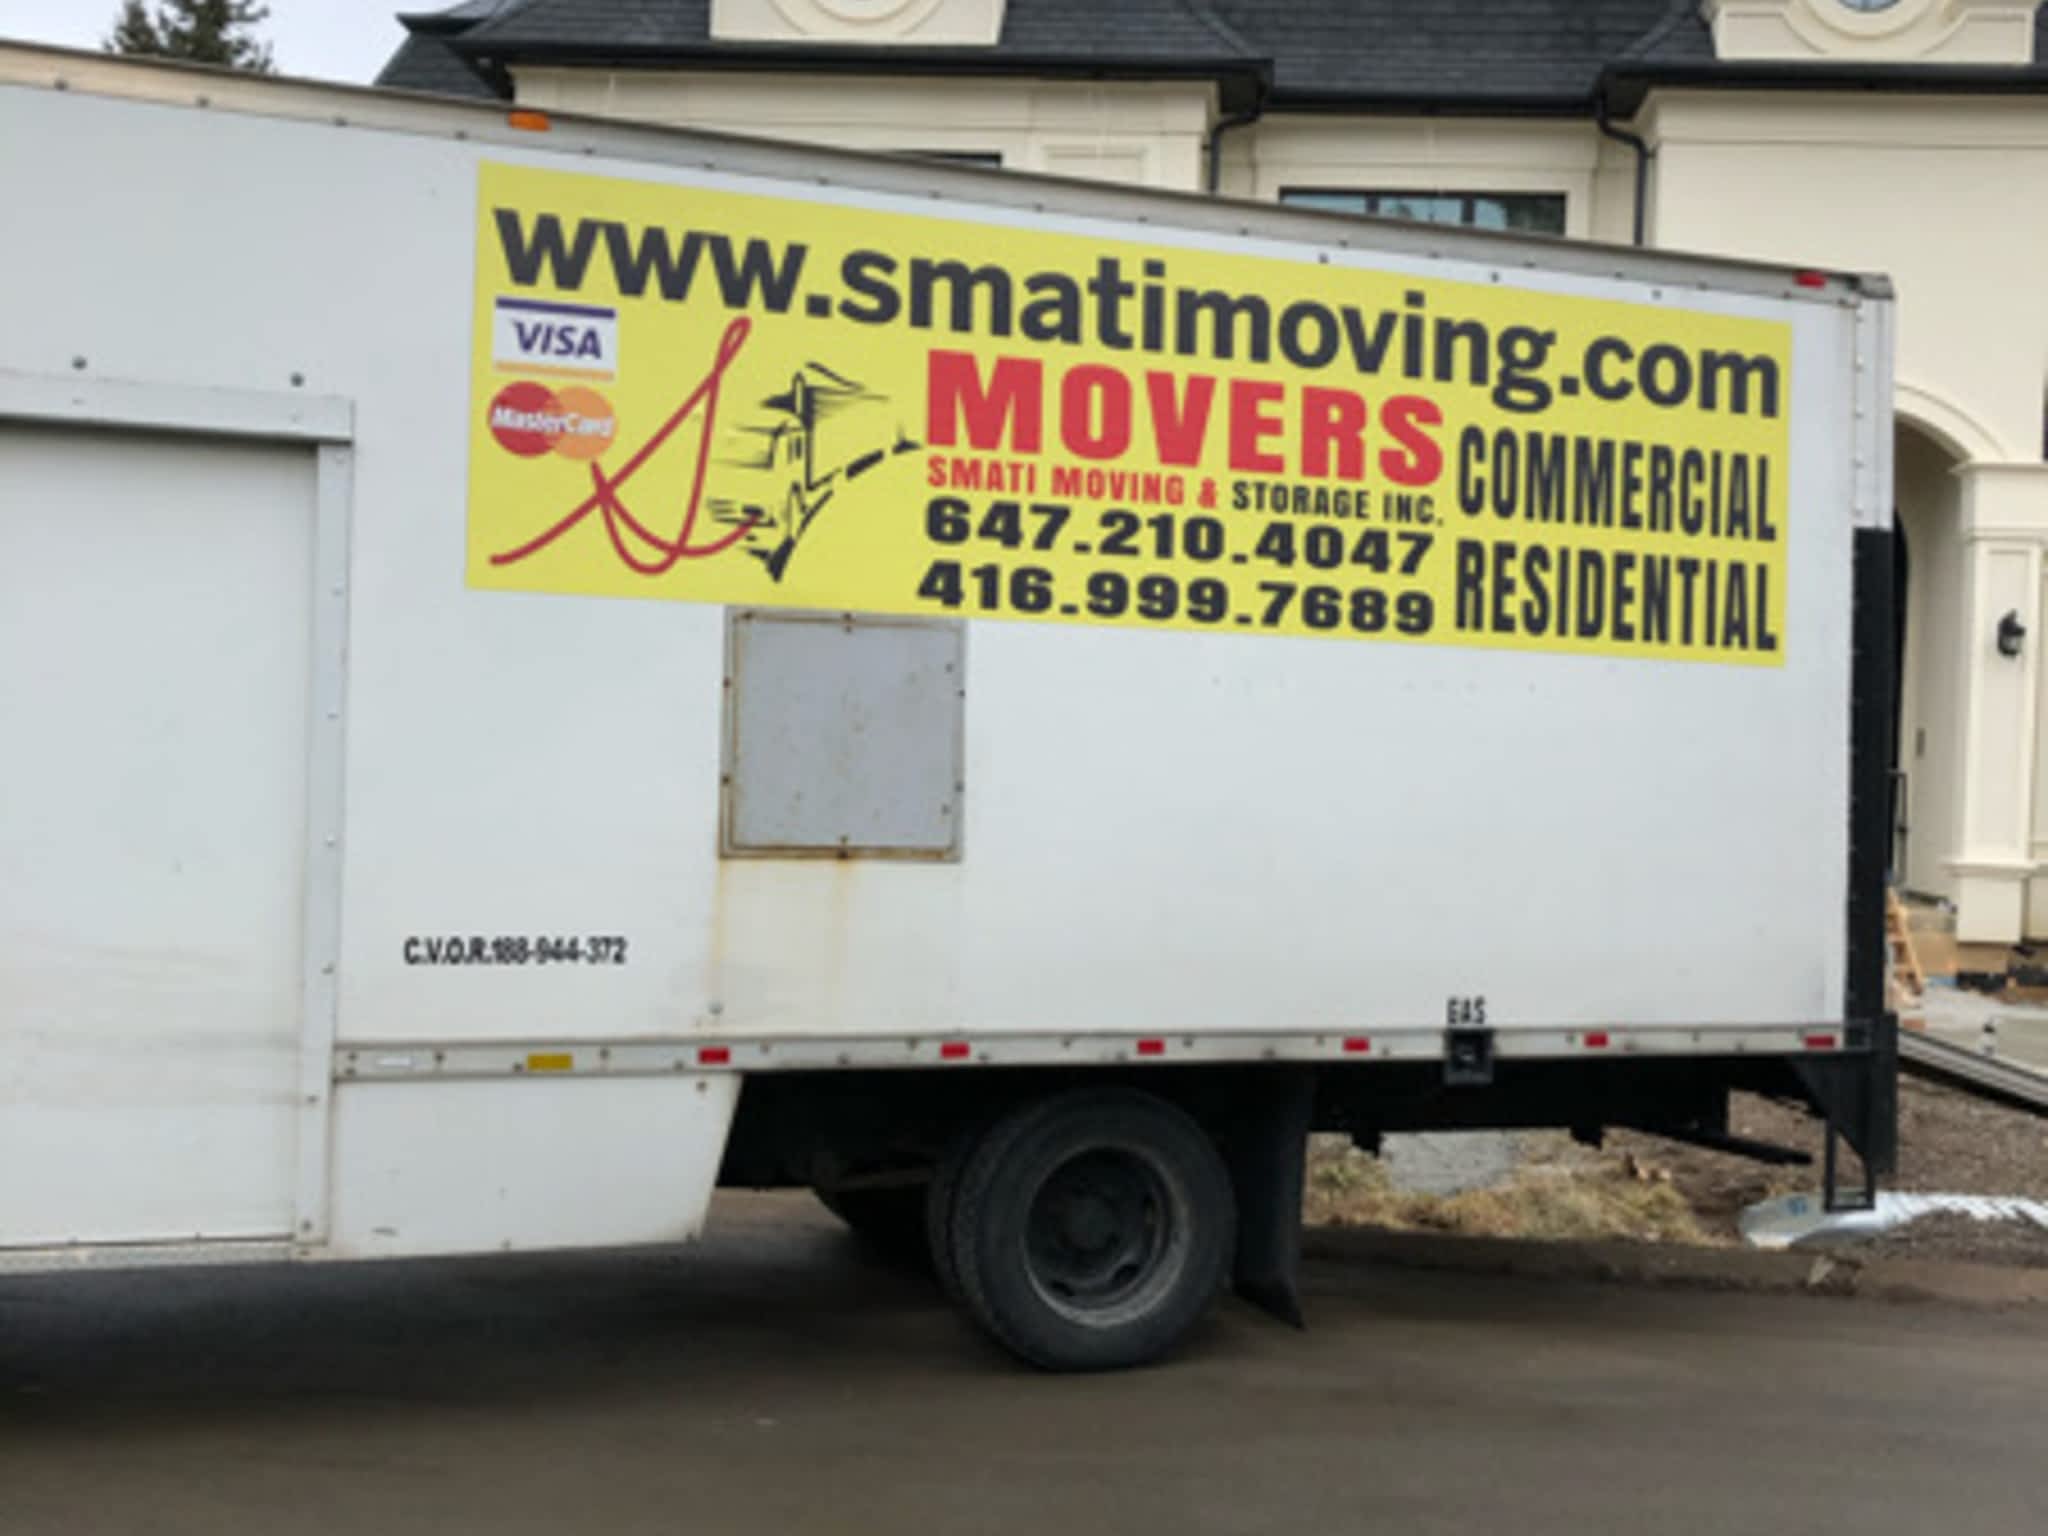 photo Smati Moving & Storage Inc